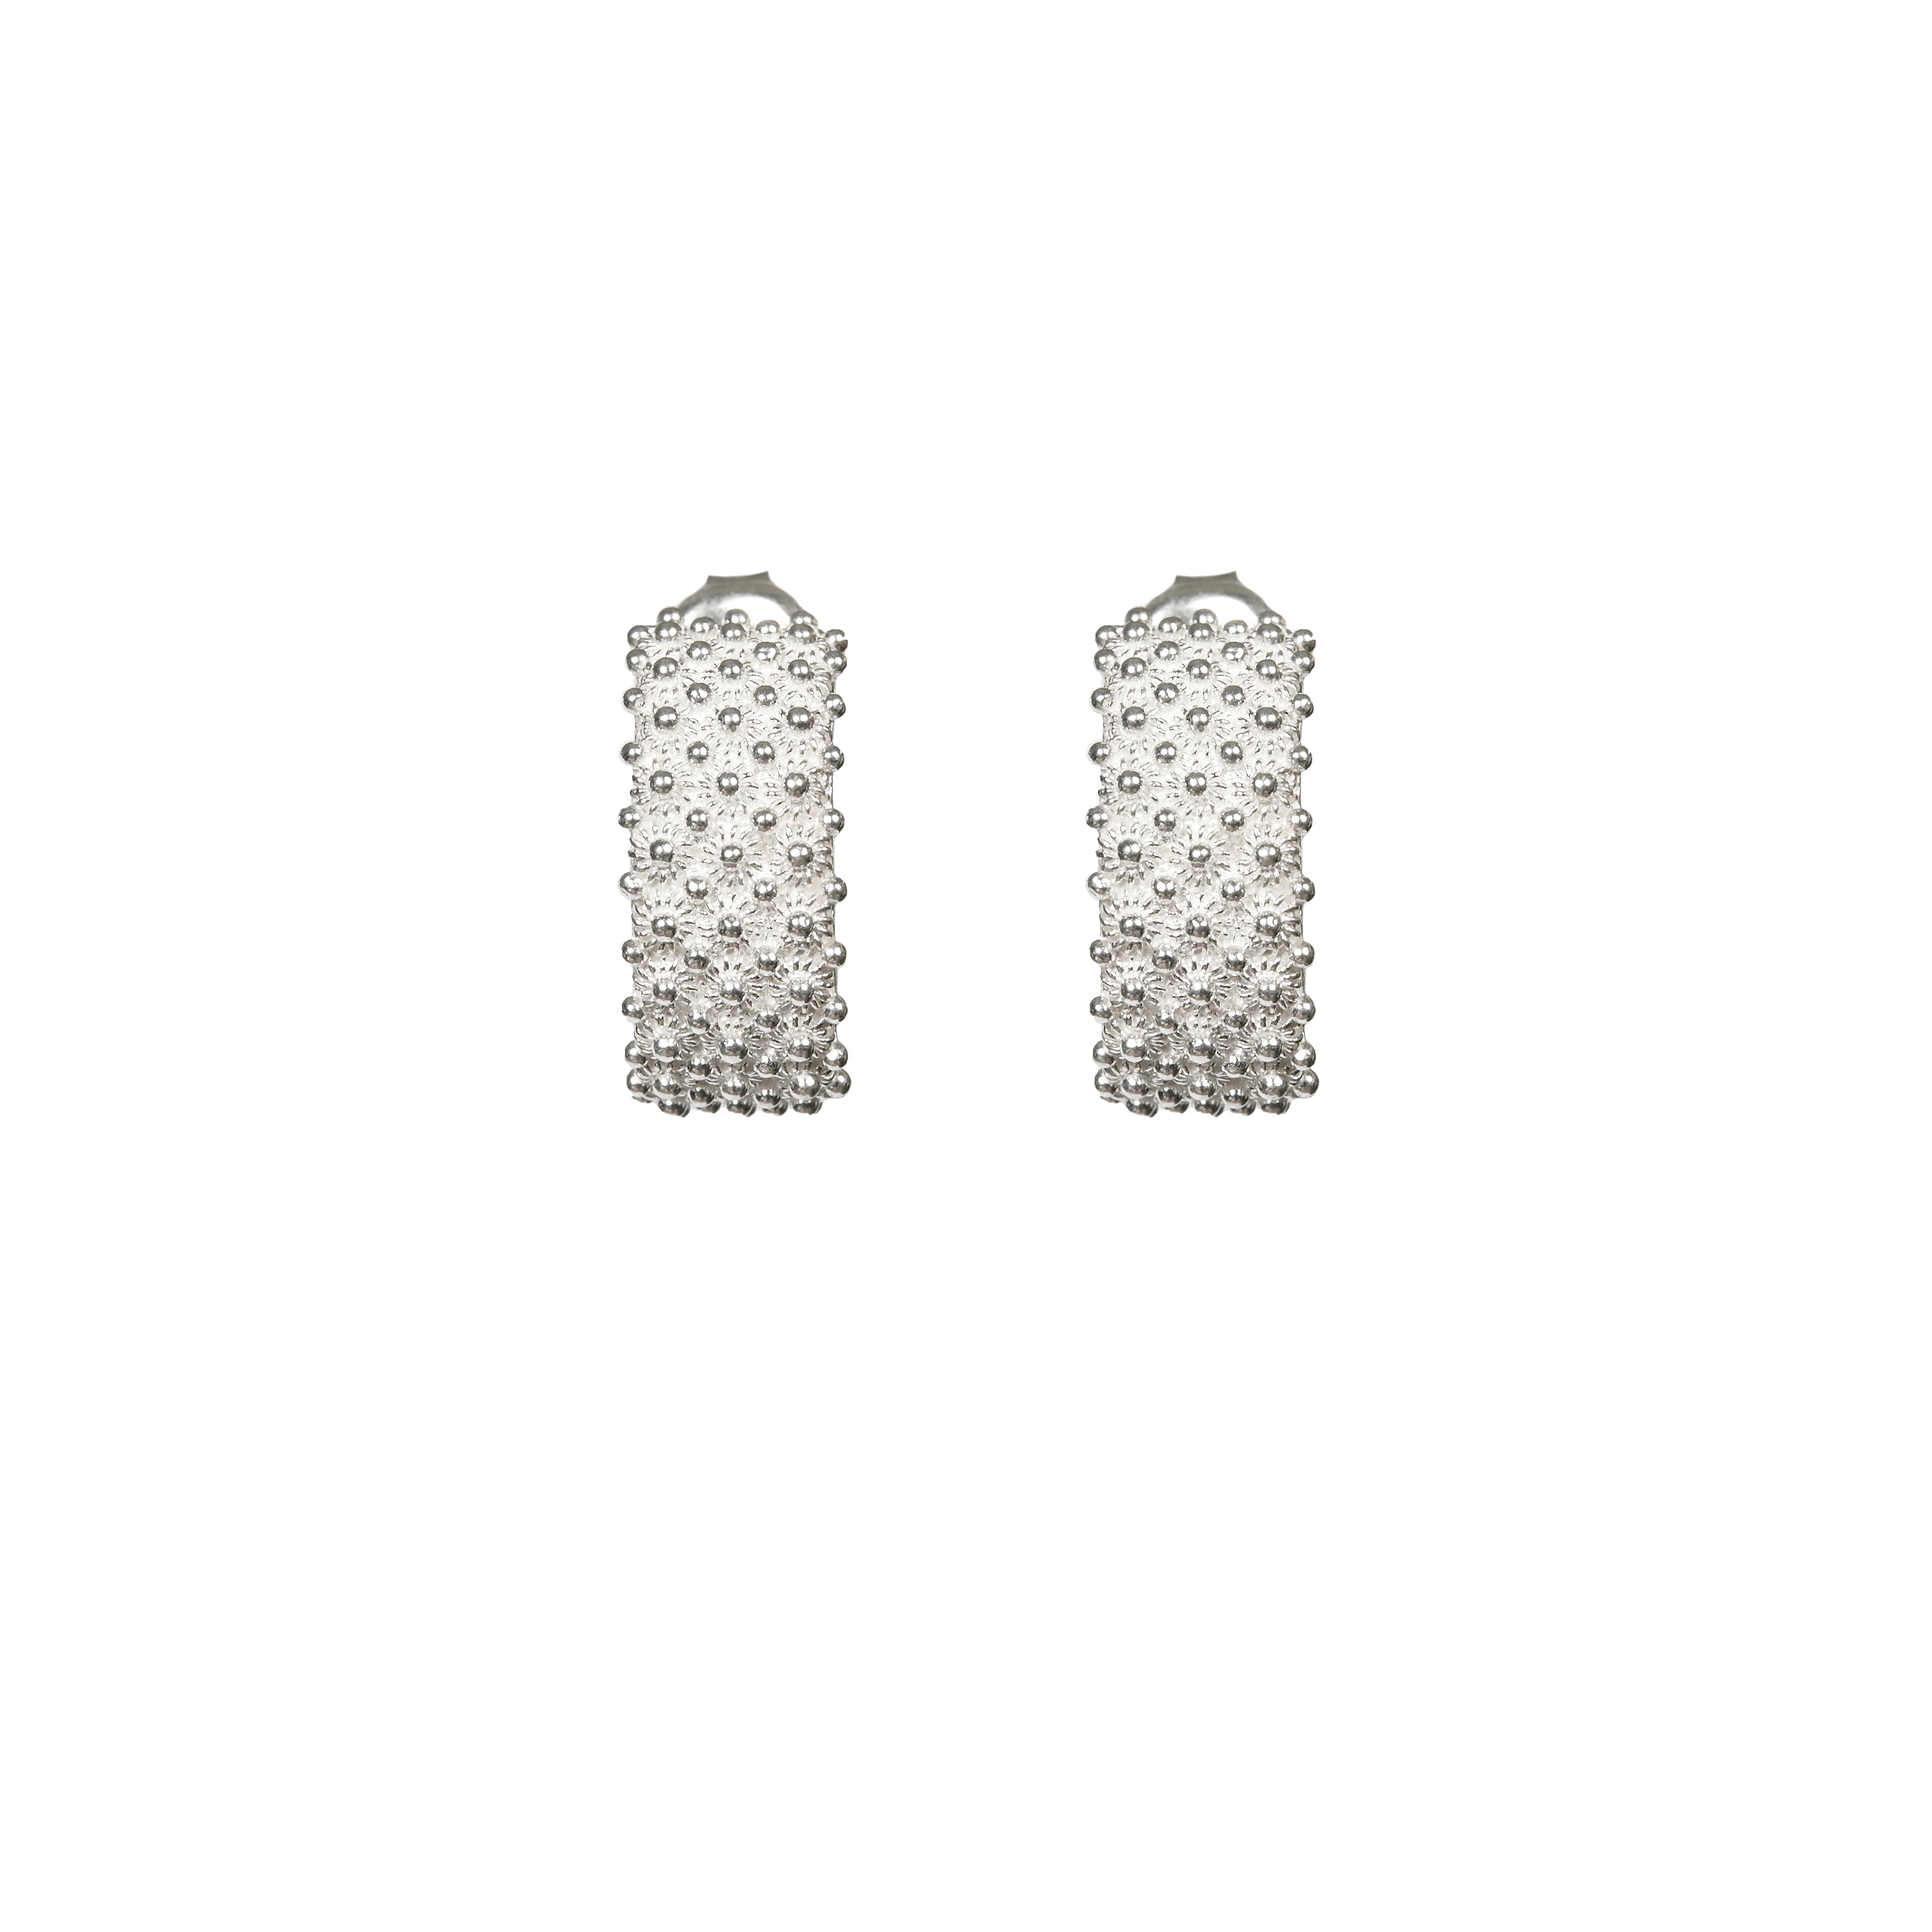 Earrings MAMIGIO - Filigree - Silver 925/1000 | Silver 925/1000 MEA AYAYA